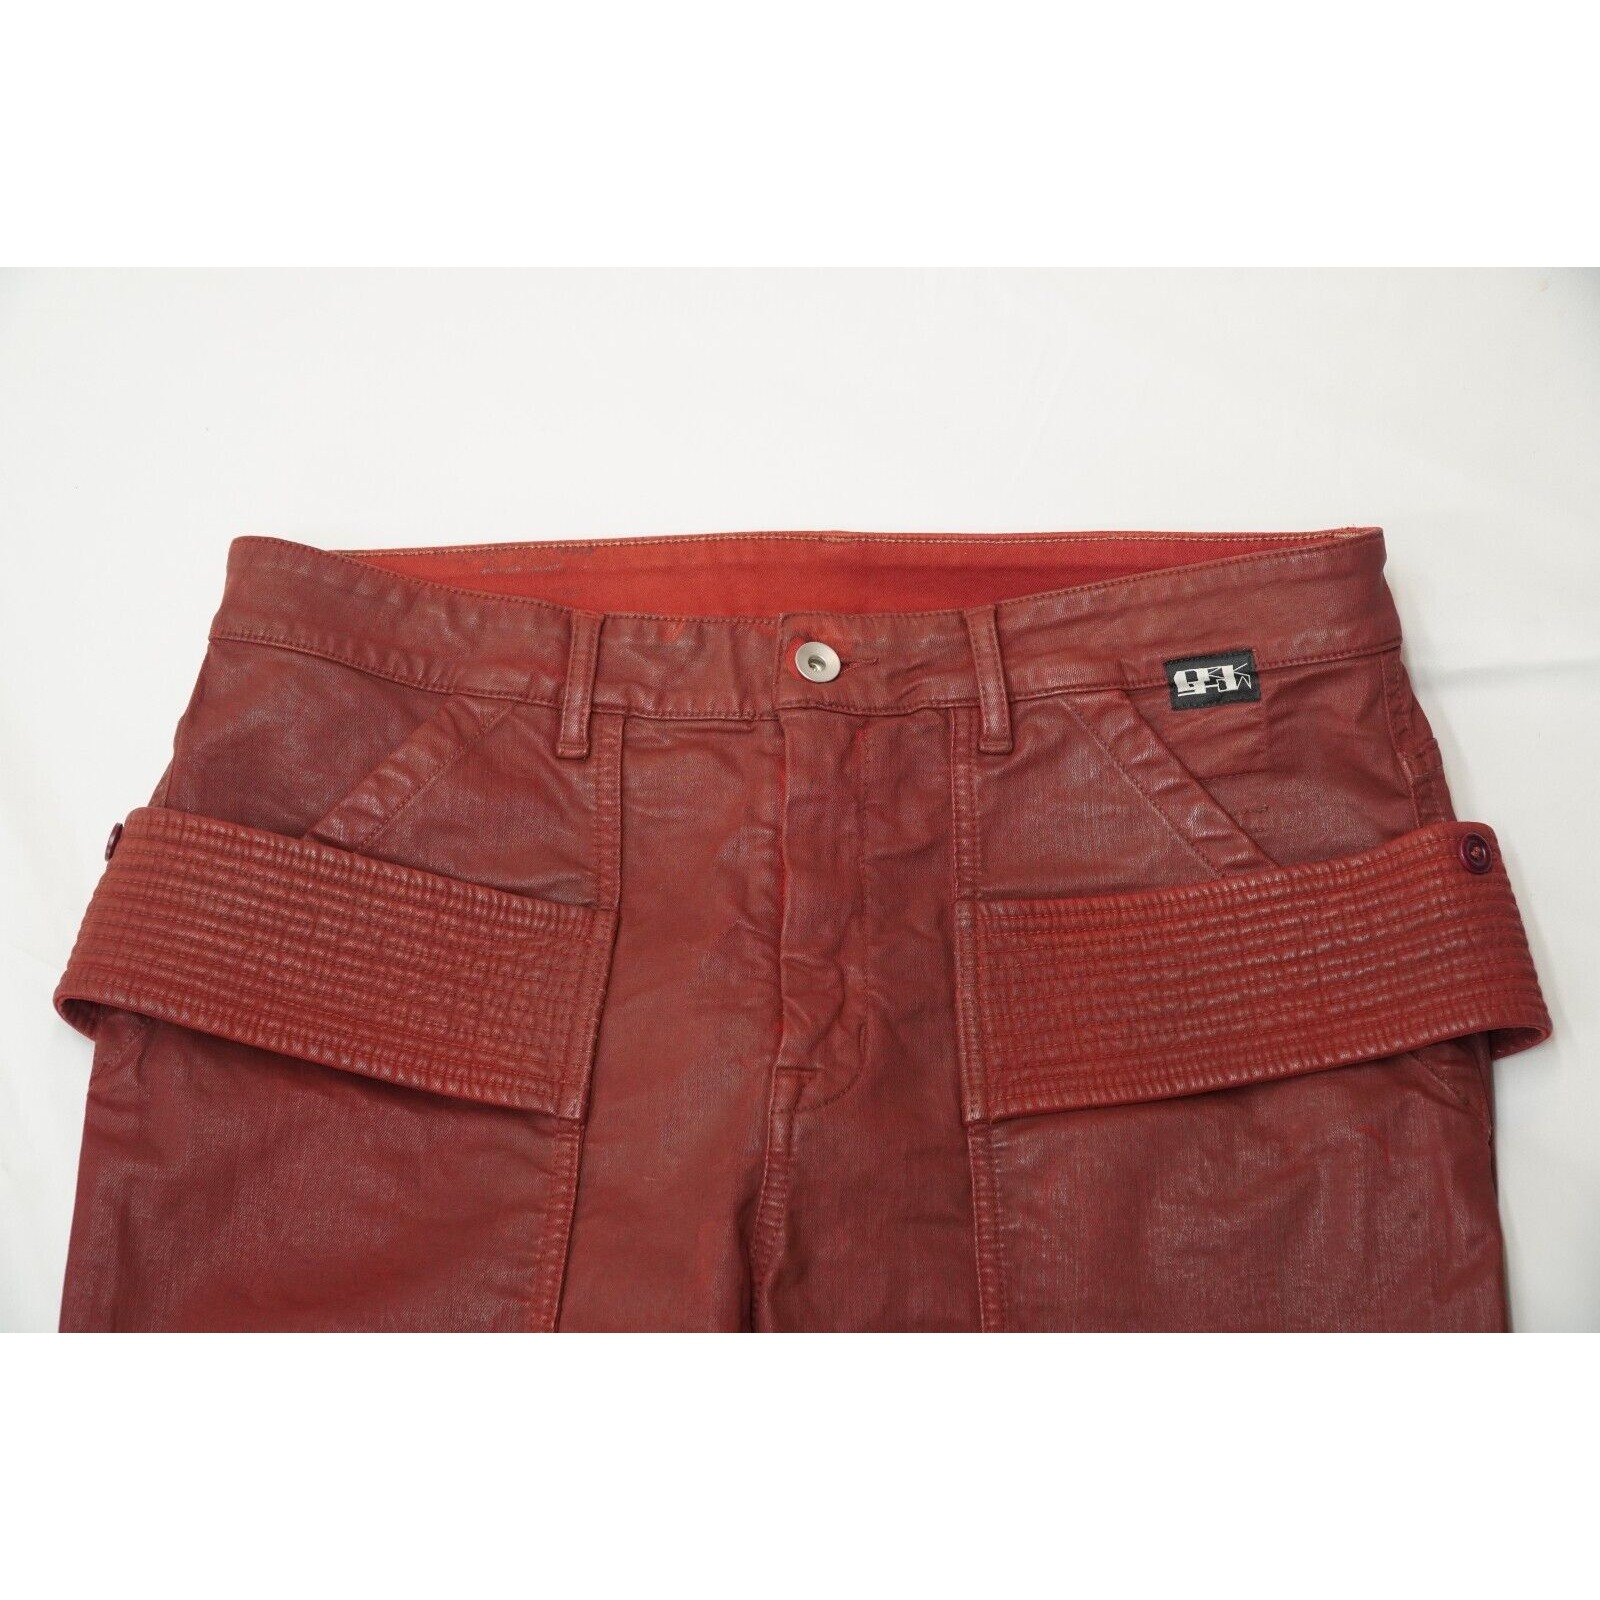 SS21 Easy Creatch Cut 33 Wax Trouser Cargo Pants Dark Cherry - 4